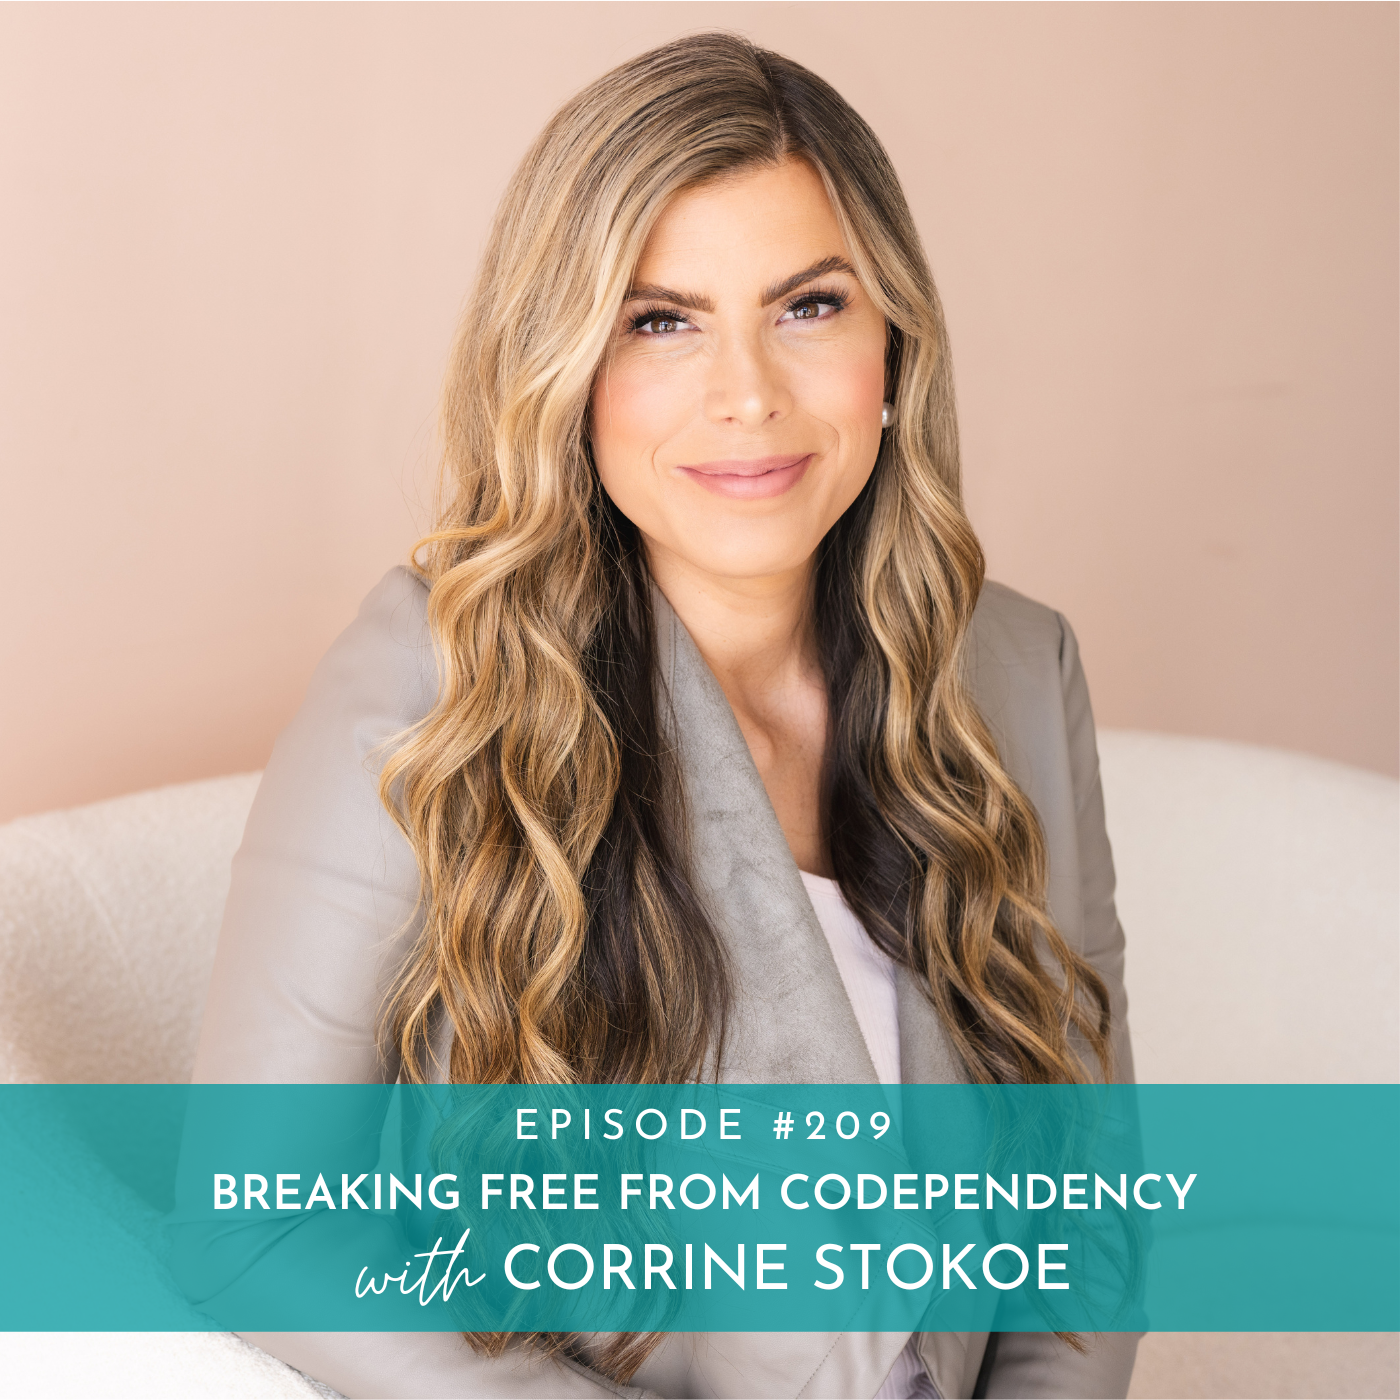 Mint Arrow Messages (podcast) - Corrine Stokoe